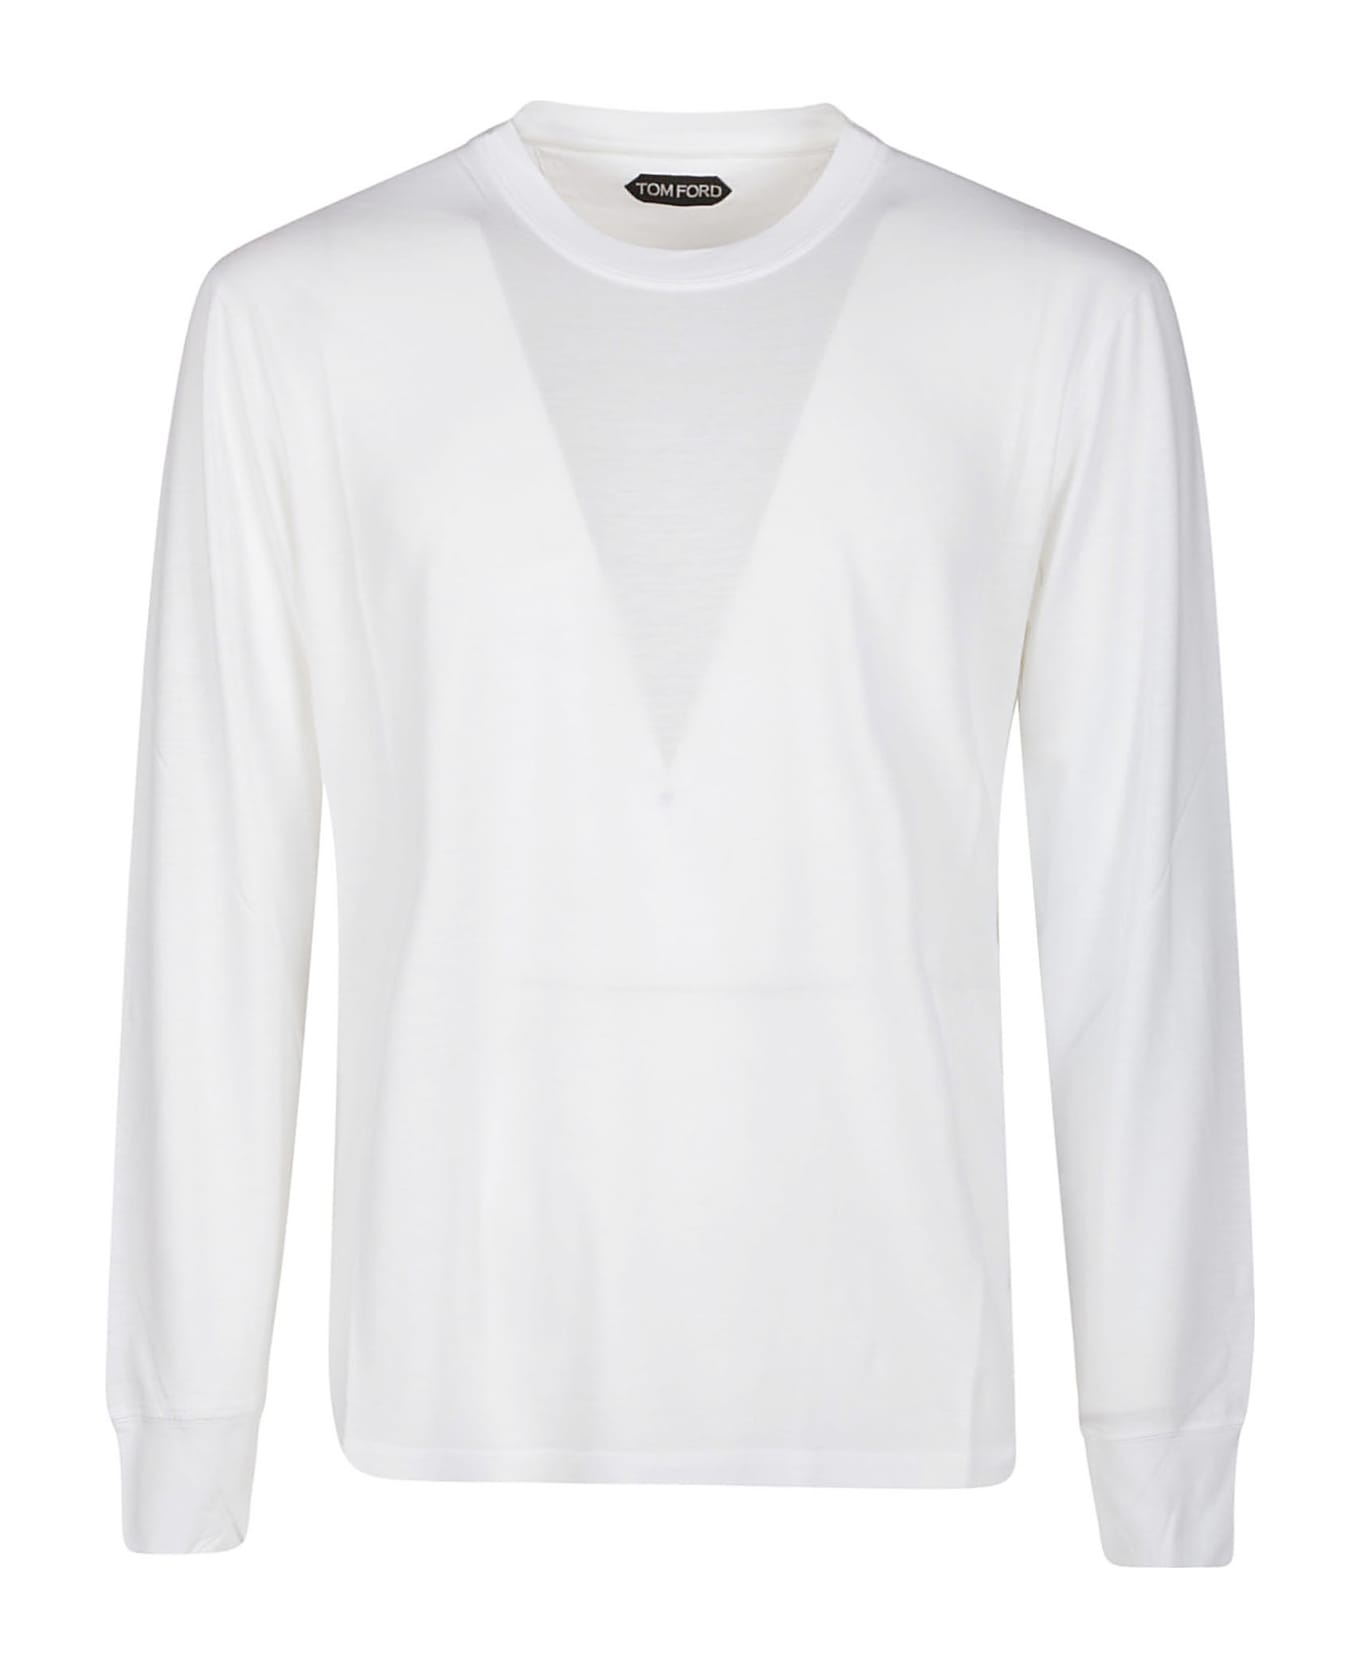 Tom Ford Long Sleeve T-shirt - White